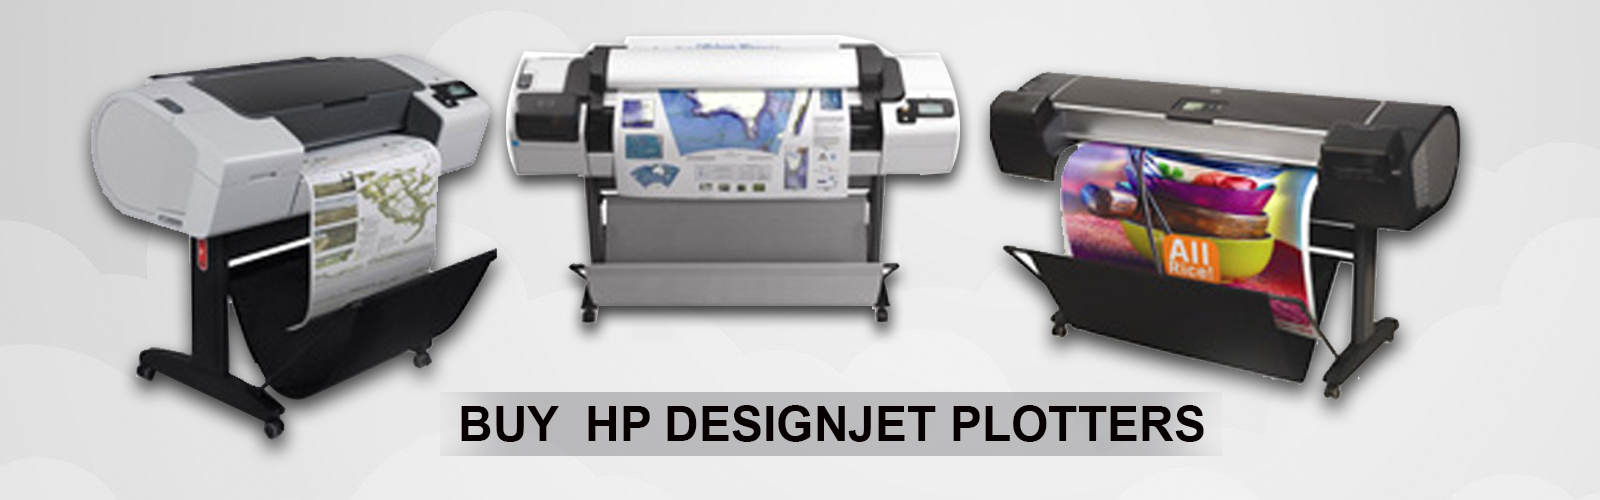 HP Designjet Plotters Sale